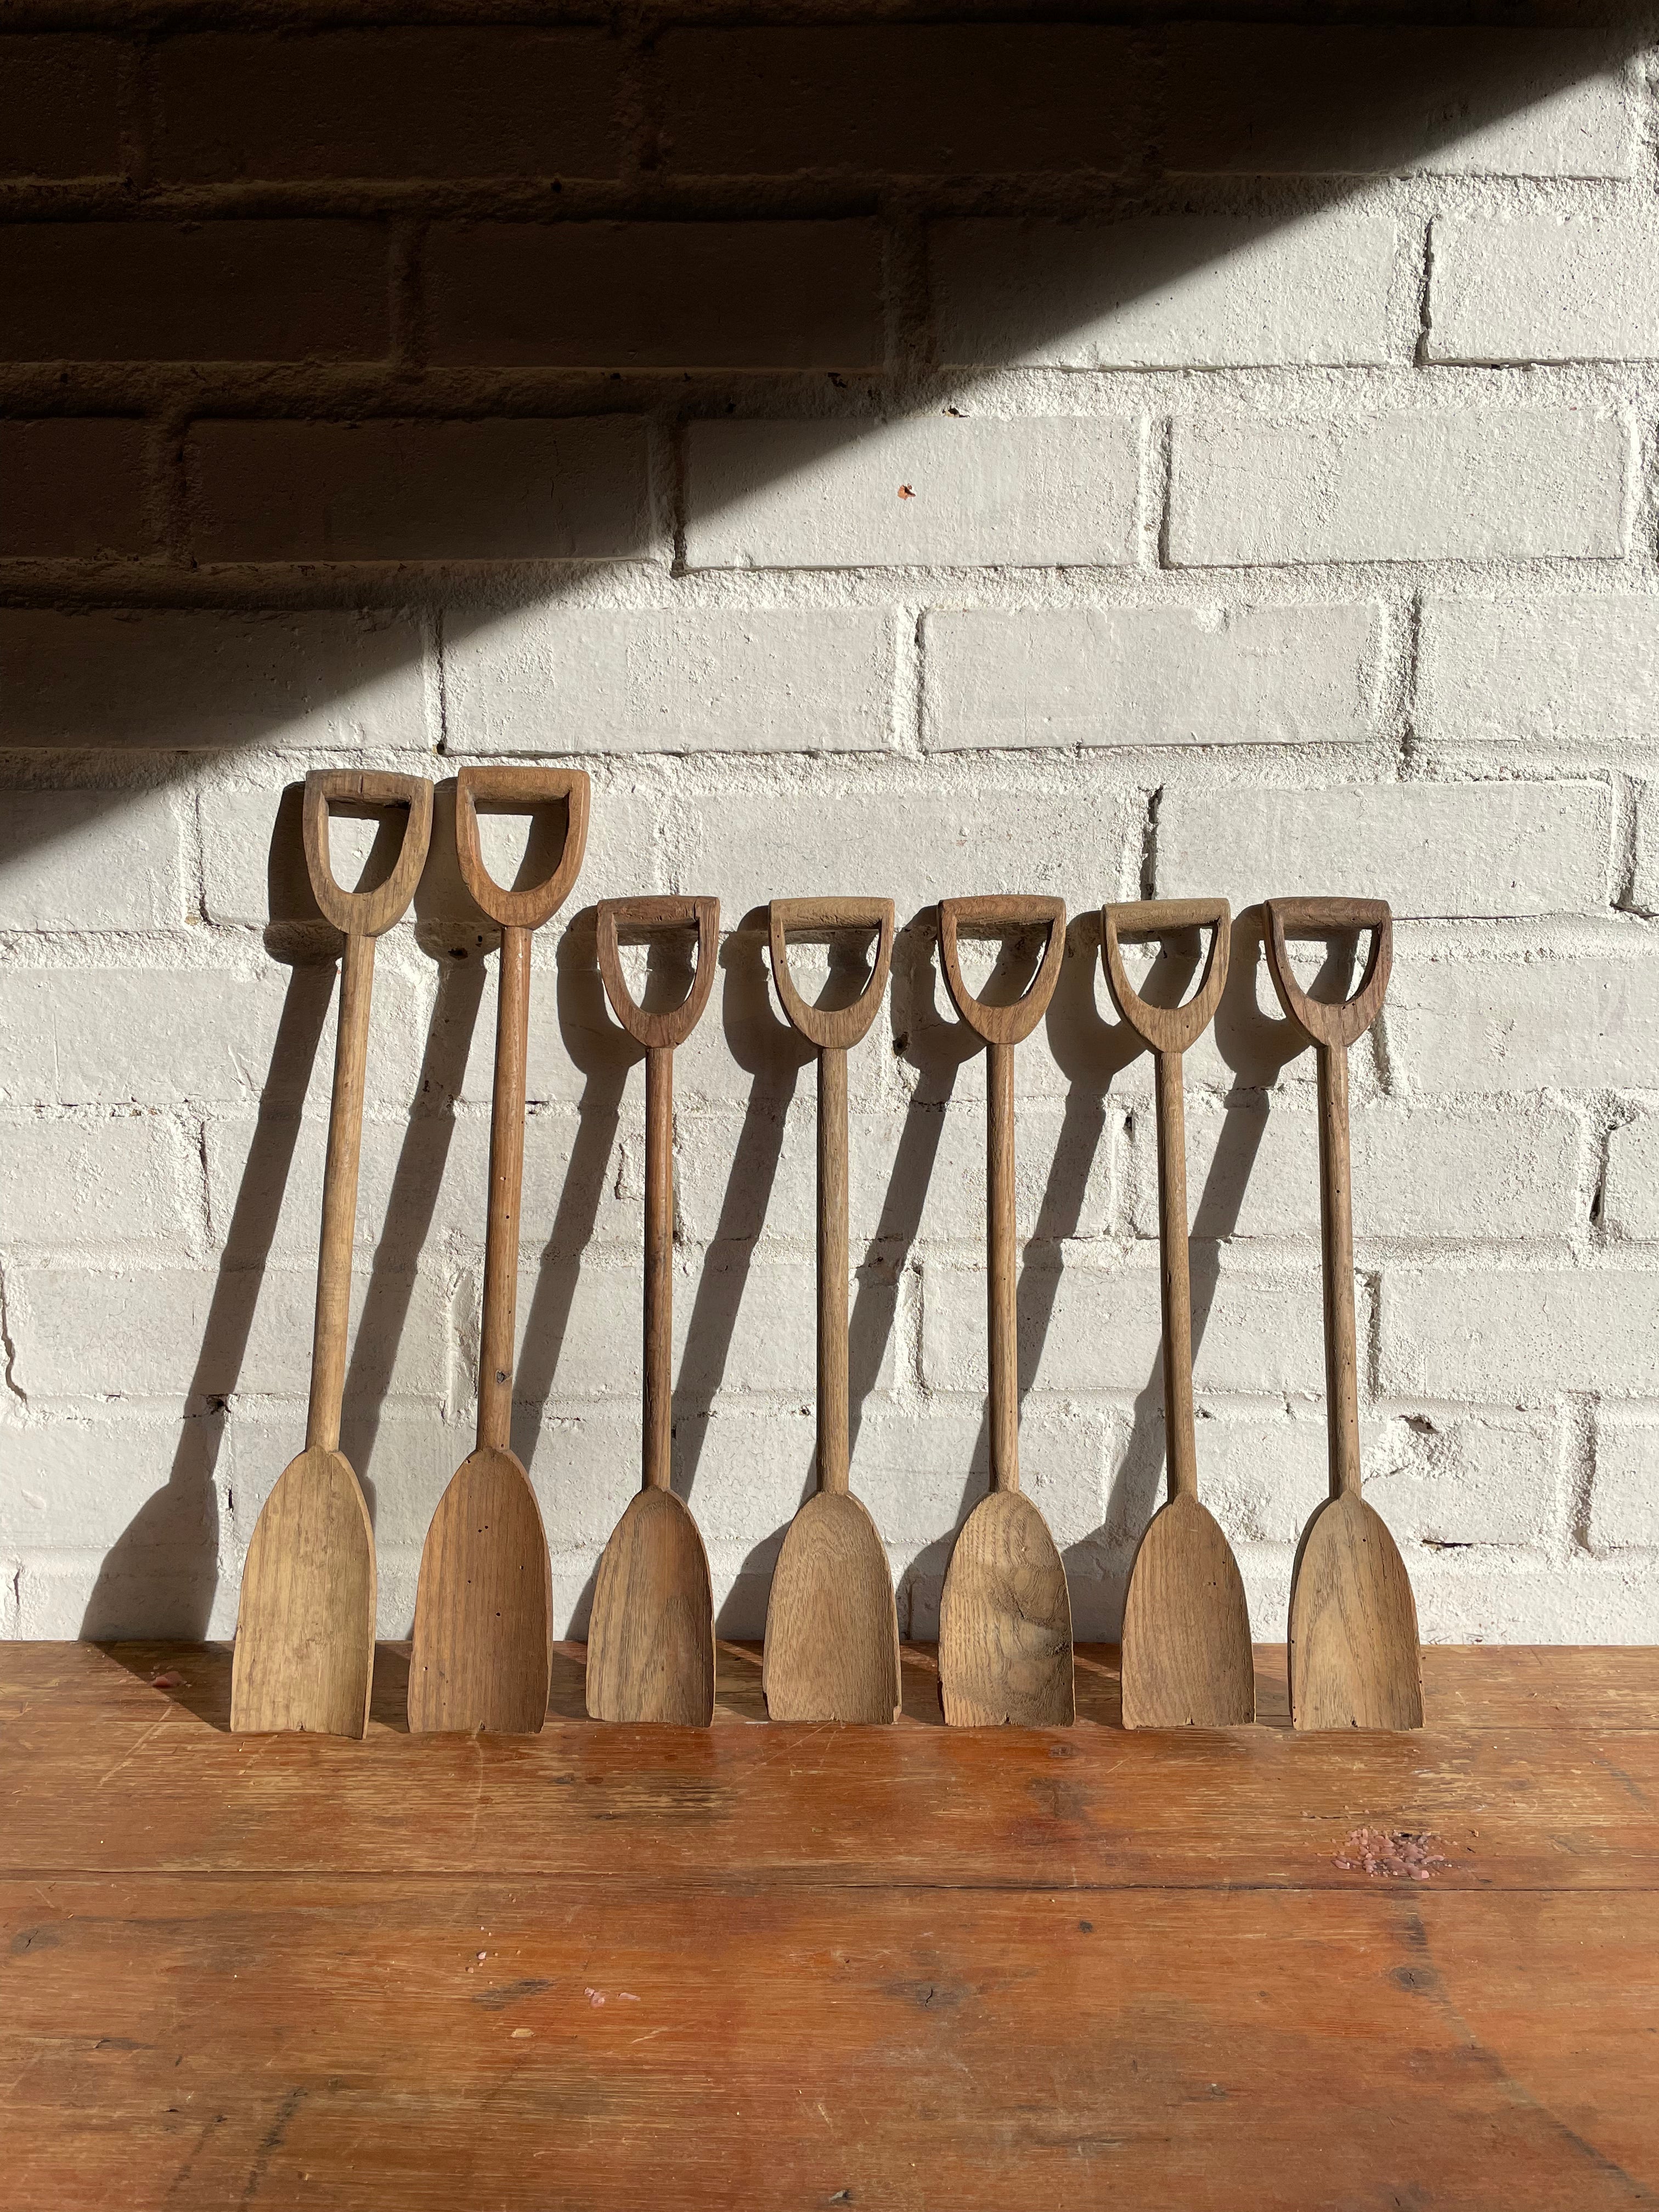 Long Edwardian Sample Malt Shovels (priced individually)